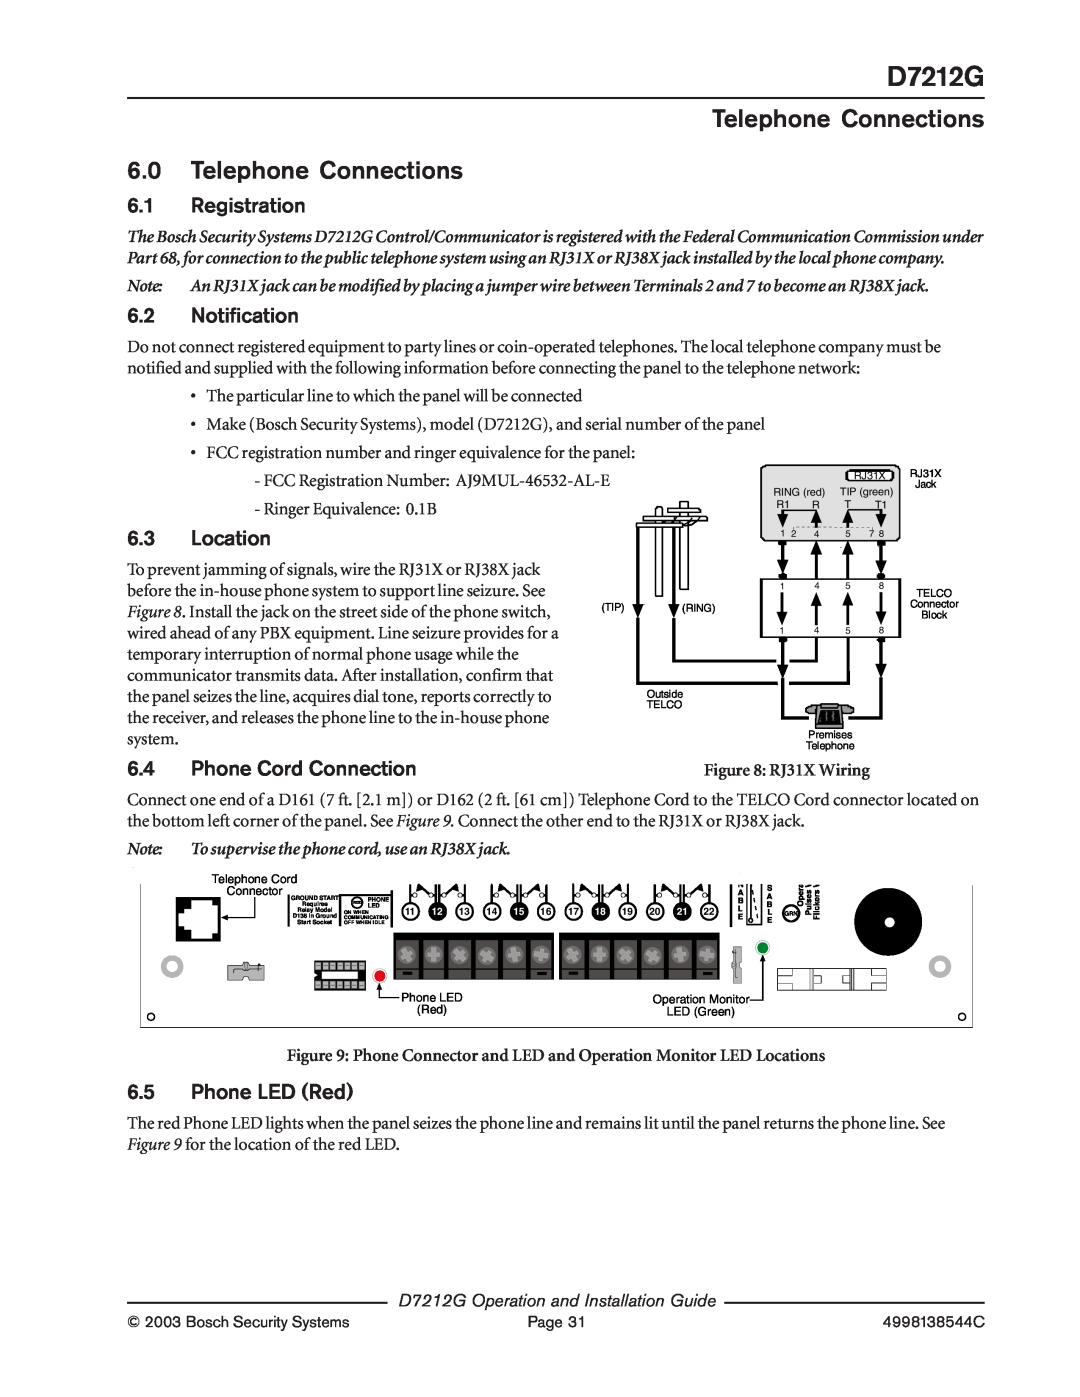 Bosch Appliances D7212G manual Telephone Connections 6.0Telephone Connections, 6.1Registration, 6.2Notification, Location 